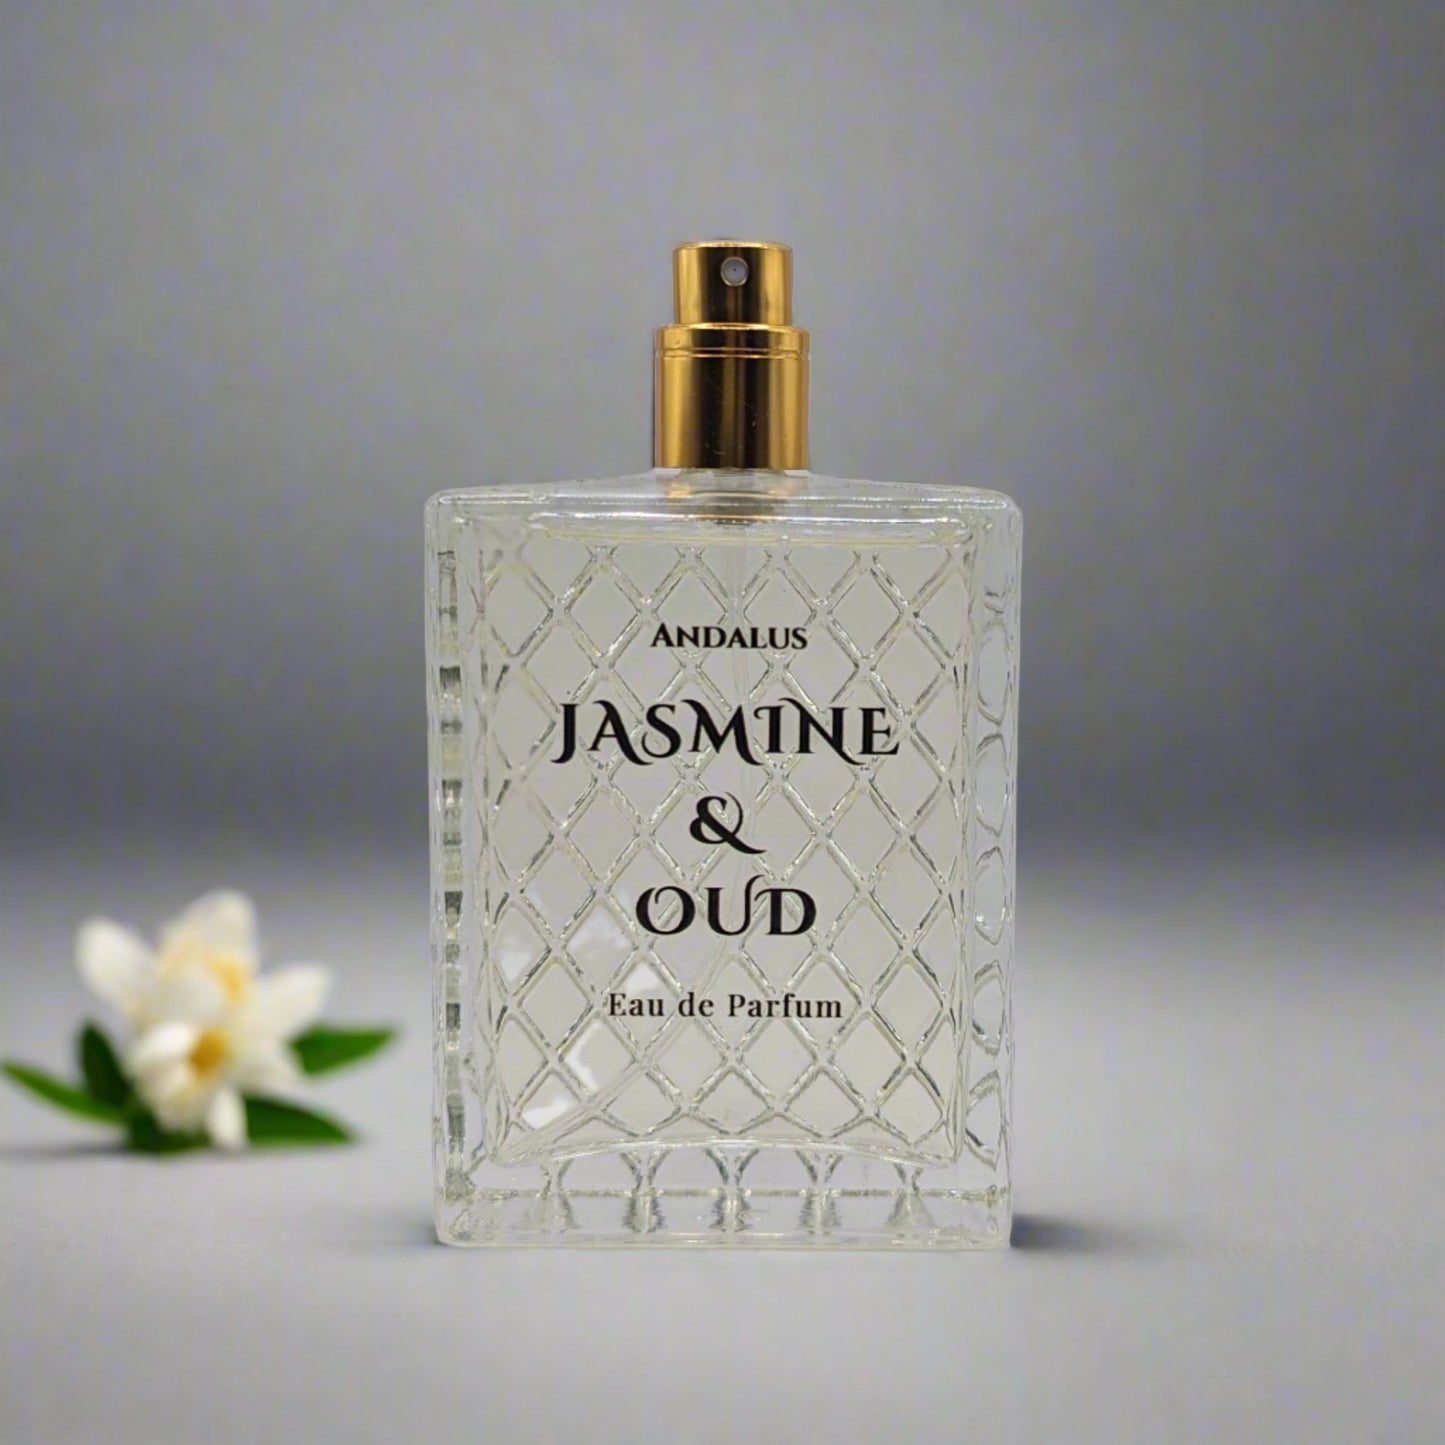 Jasmine & Oud 100mL Perfume Bottle